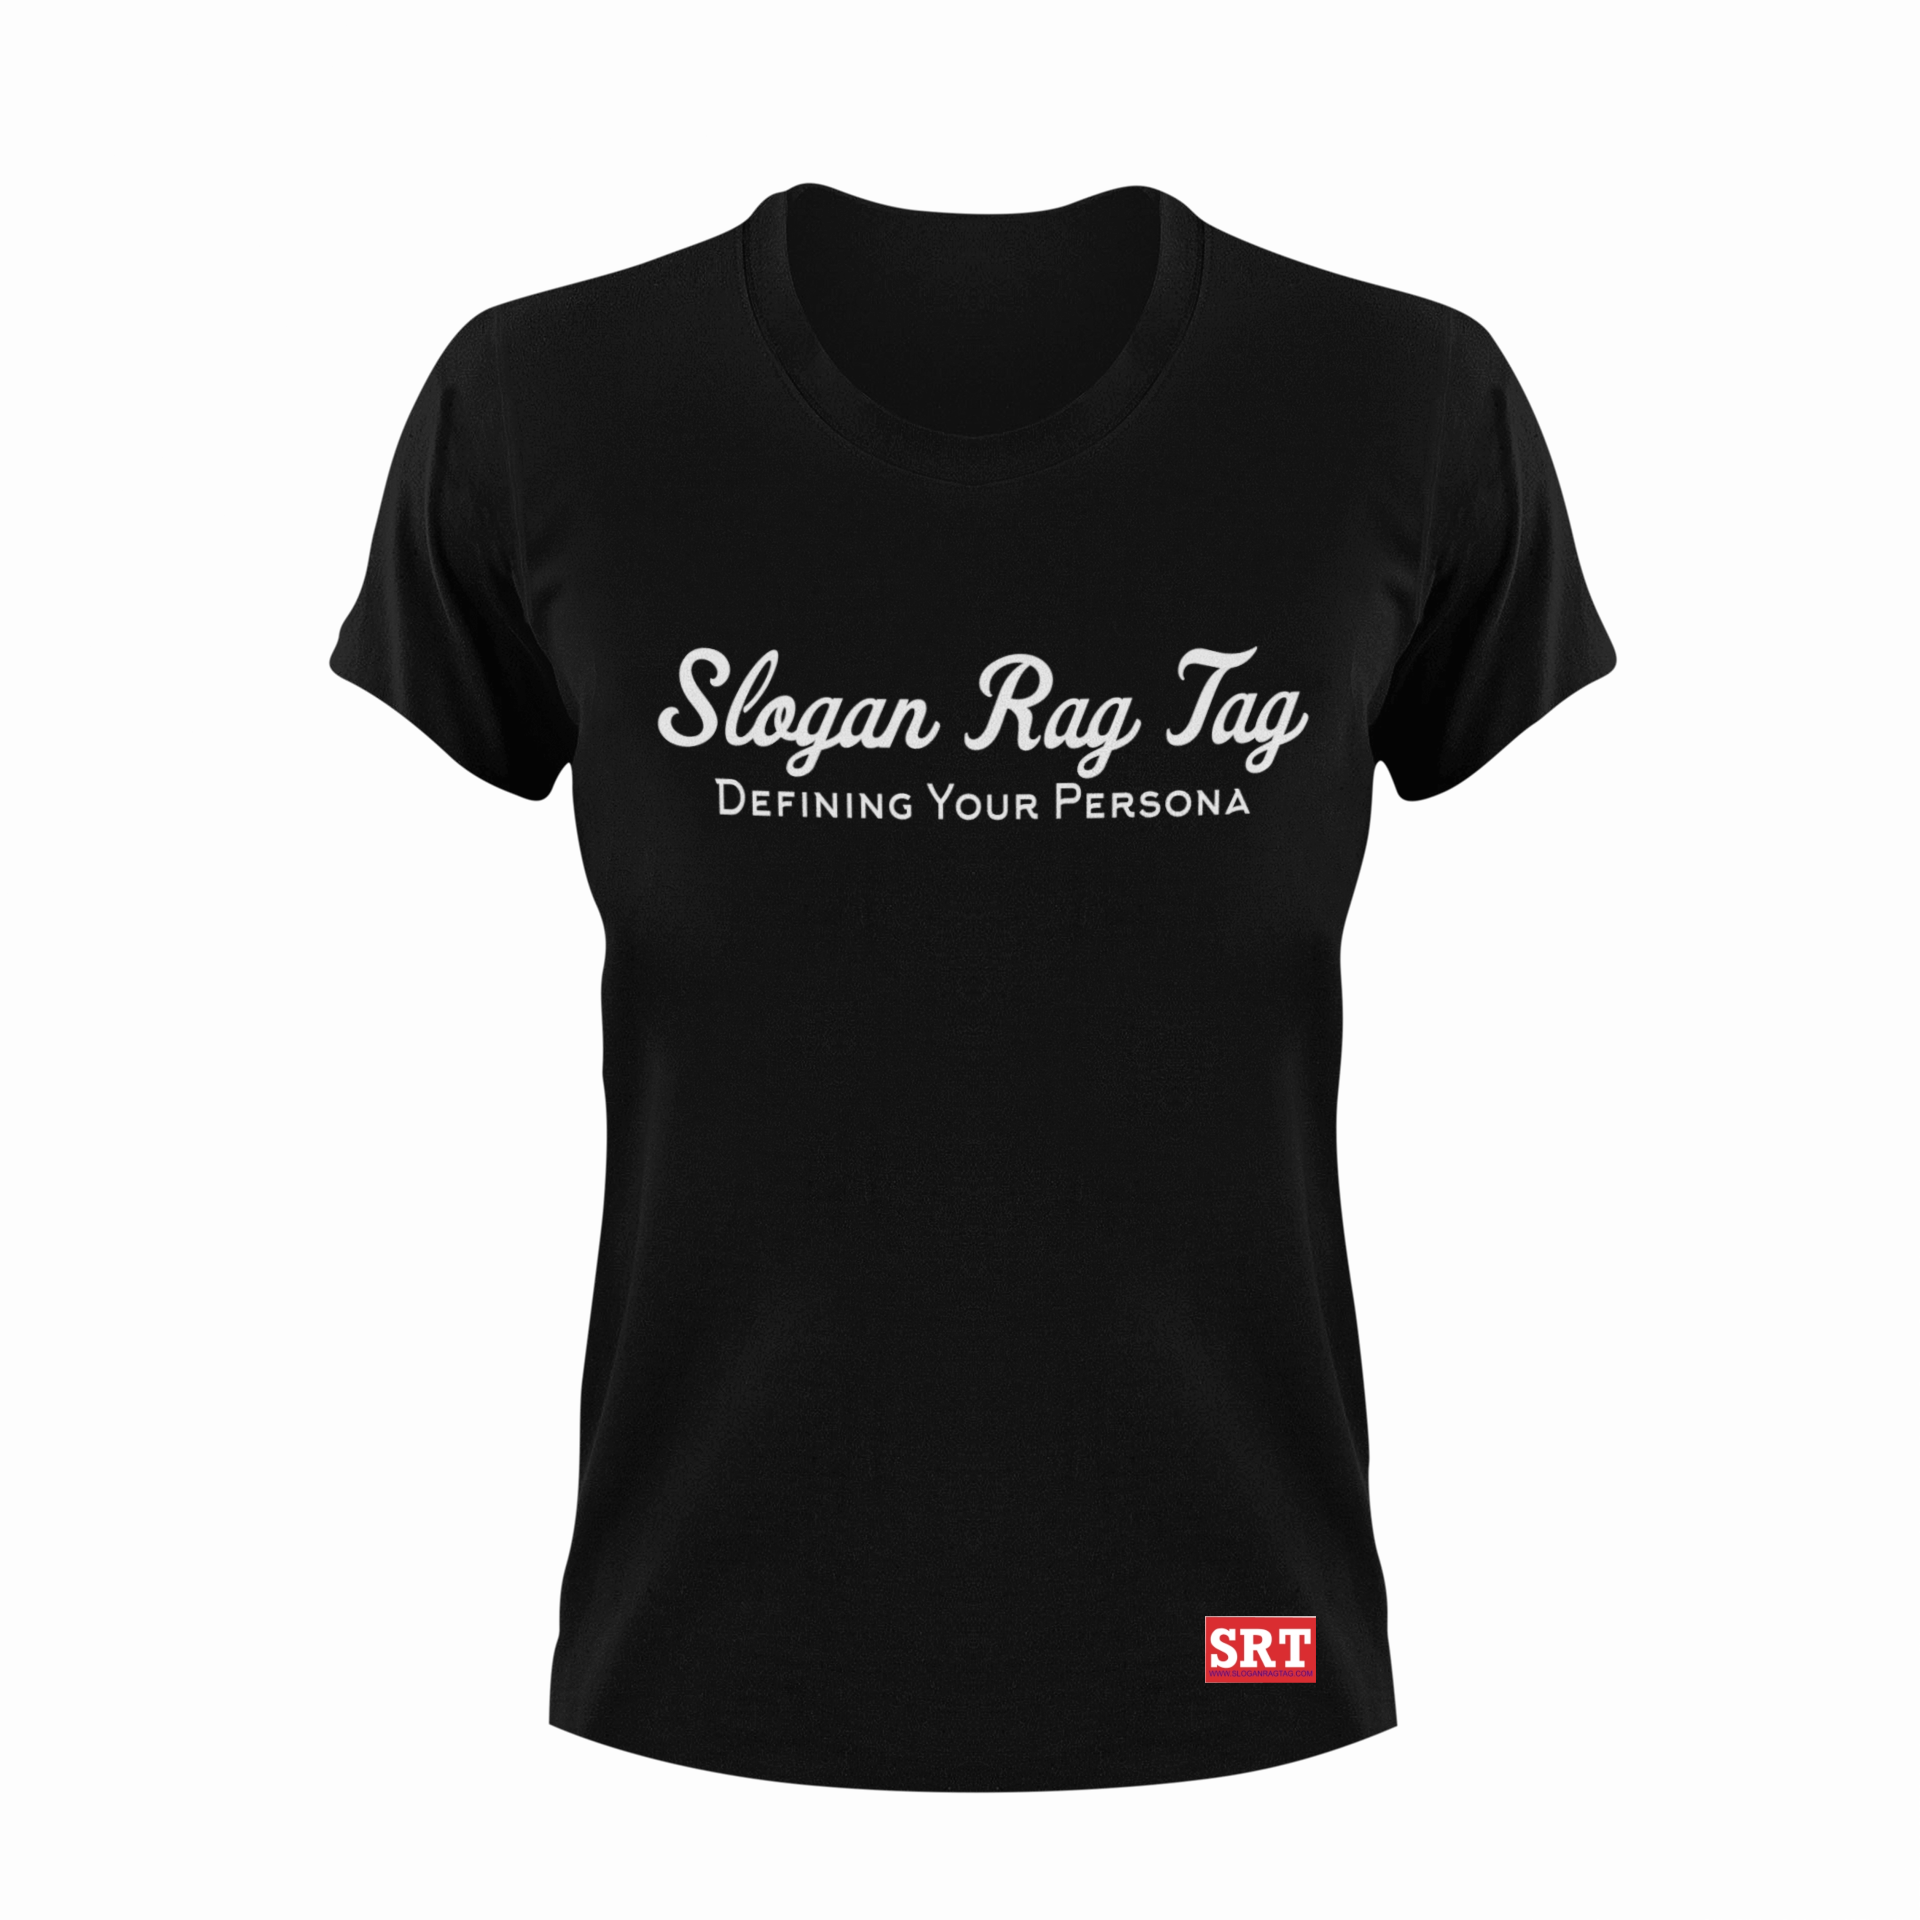 Slogan Rag Tag (defining your persona) MEN'S T-shirt